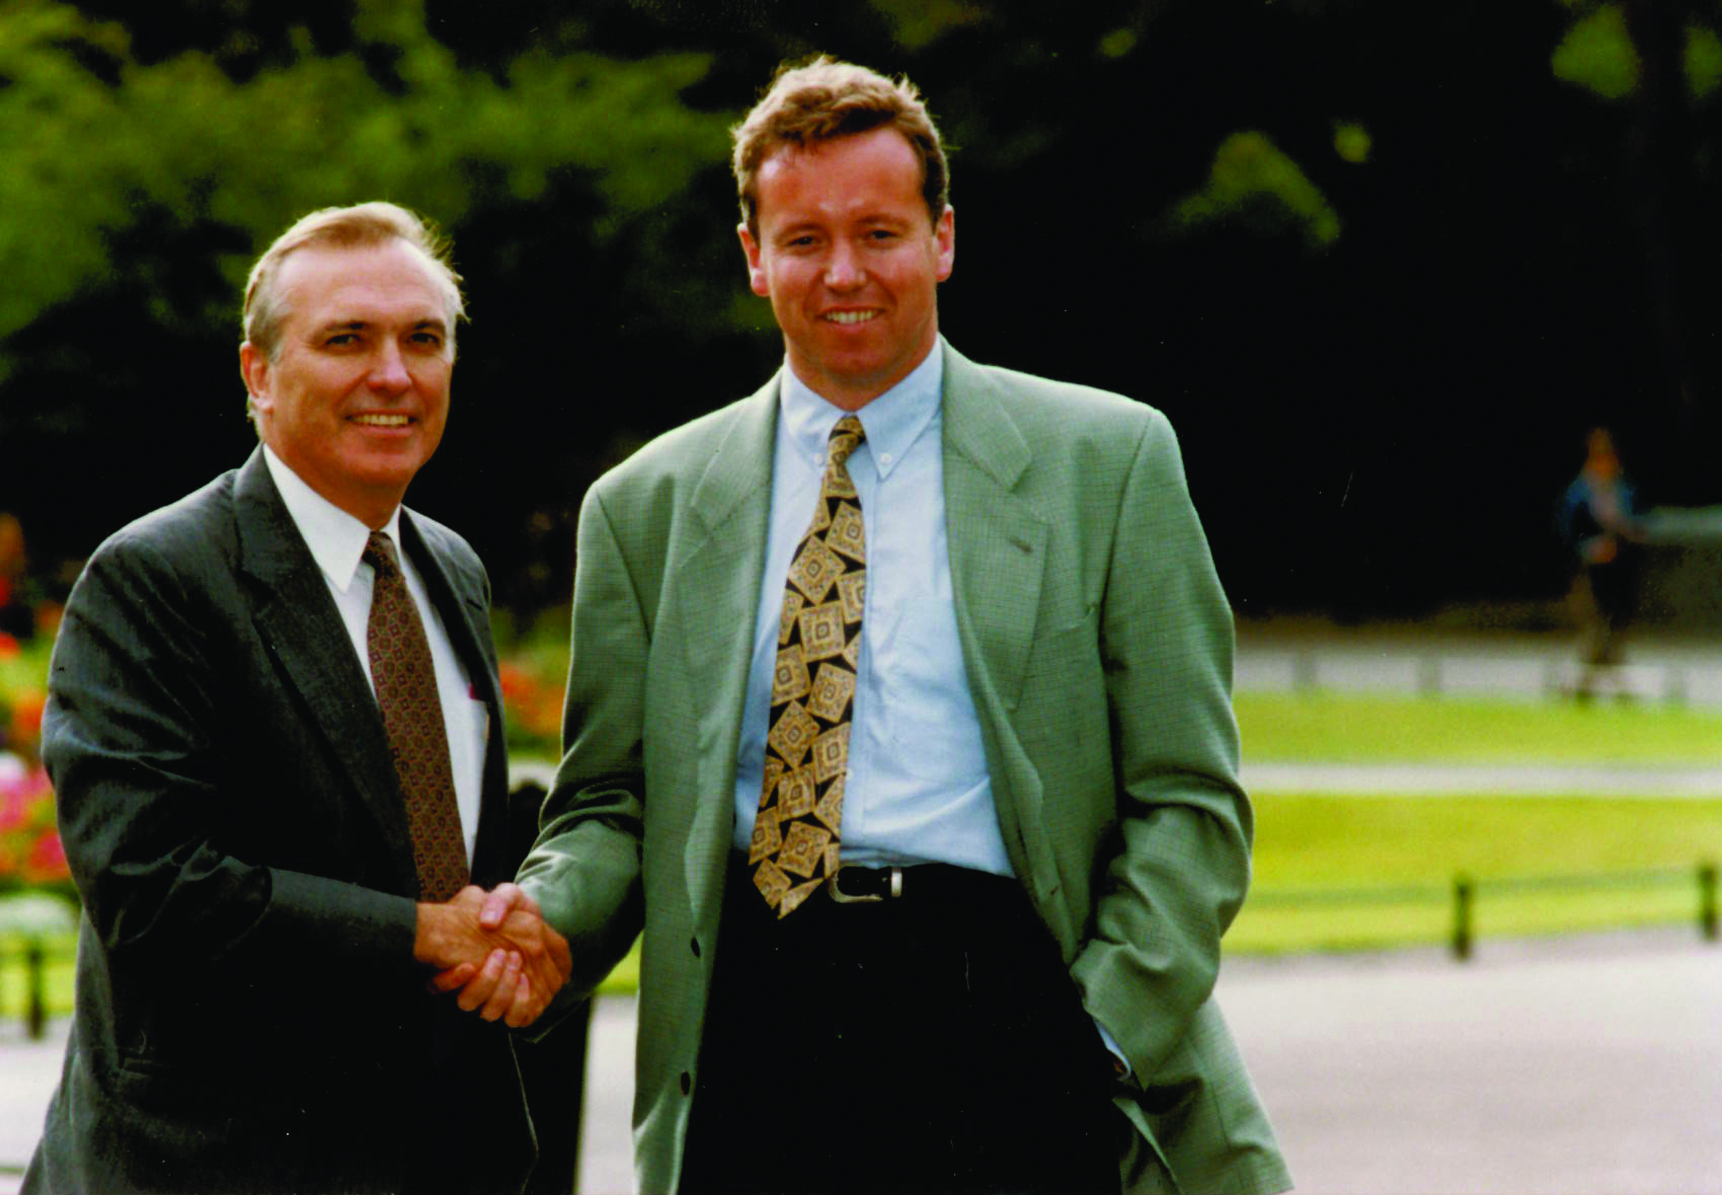 Dublin 1990: Sealing the joint venture with FleishmanHillard’s John Graham.